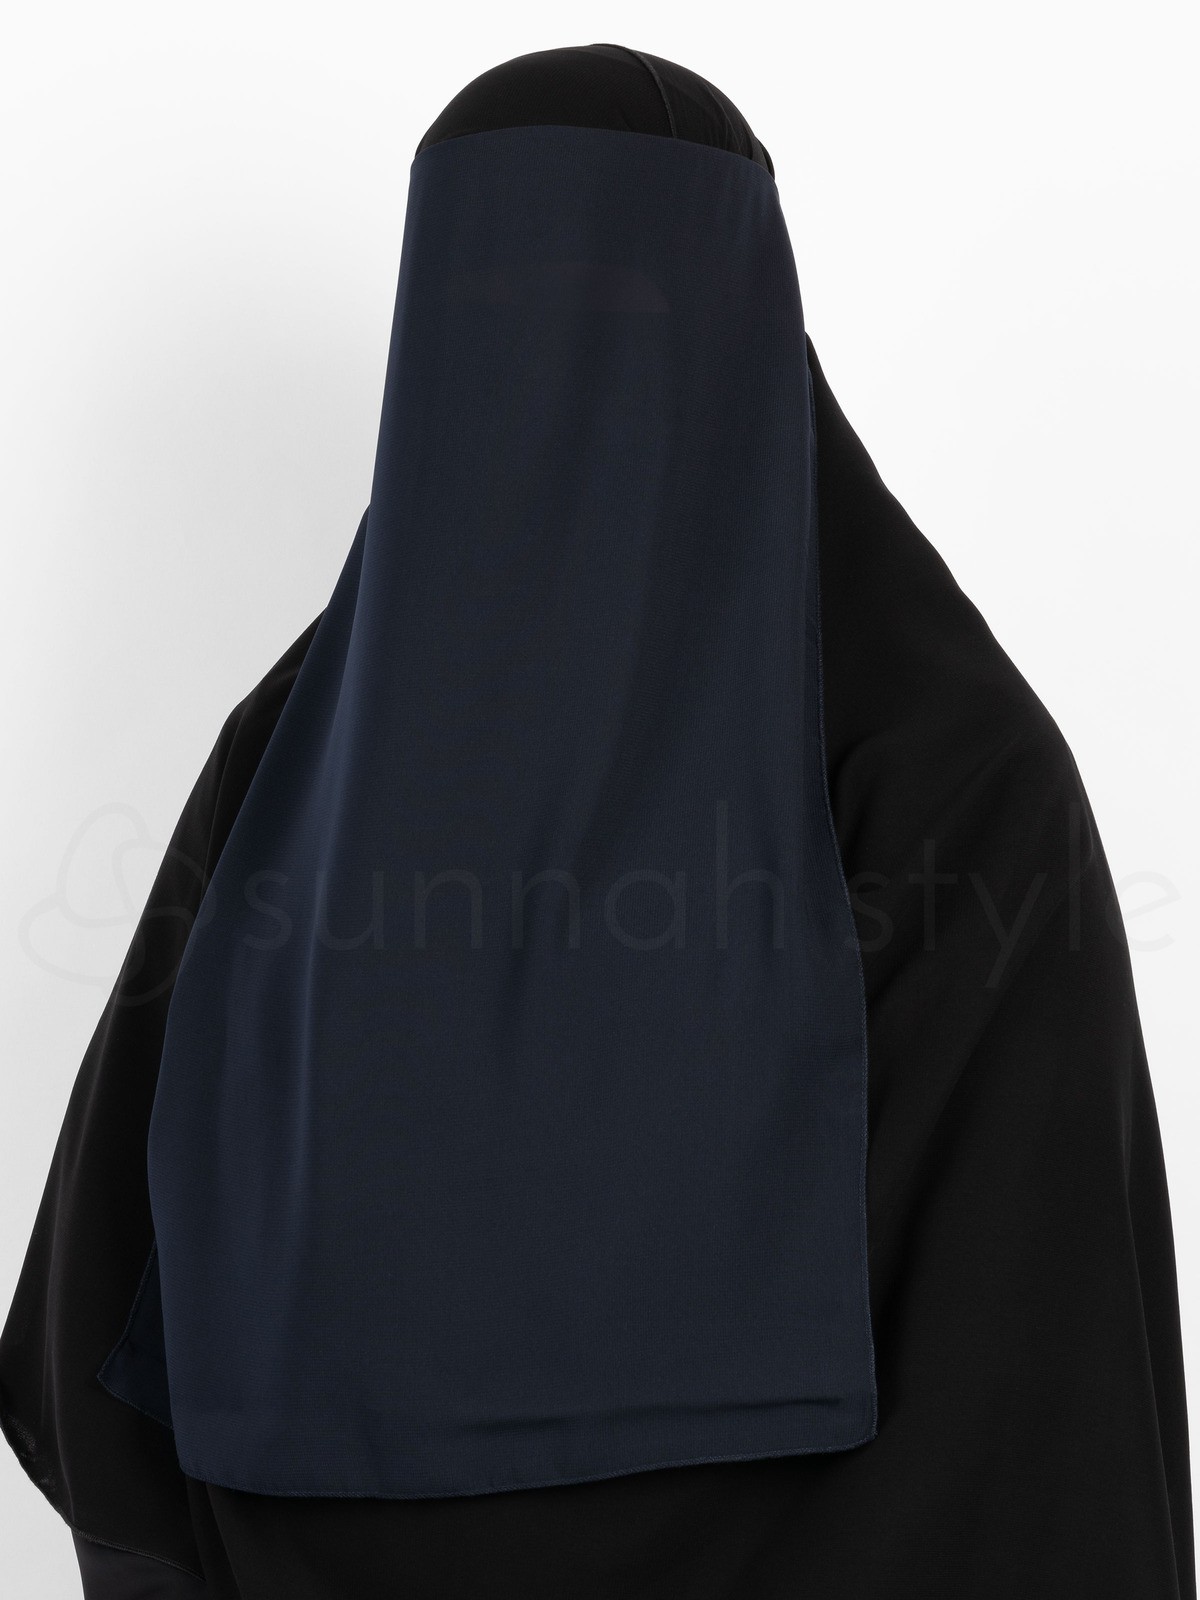 Sunnah Style - No-Pinch Two Layer Niqab (Black)